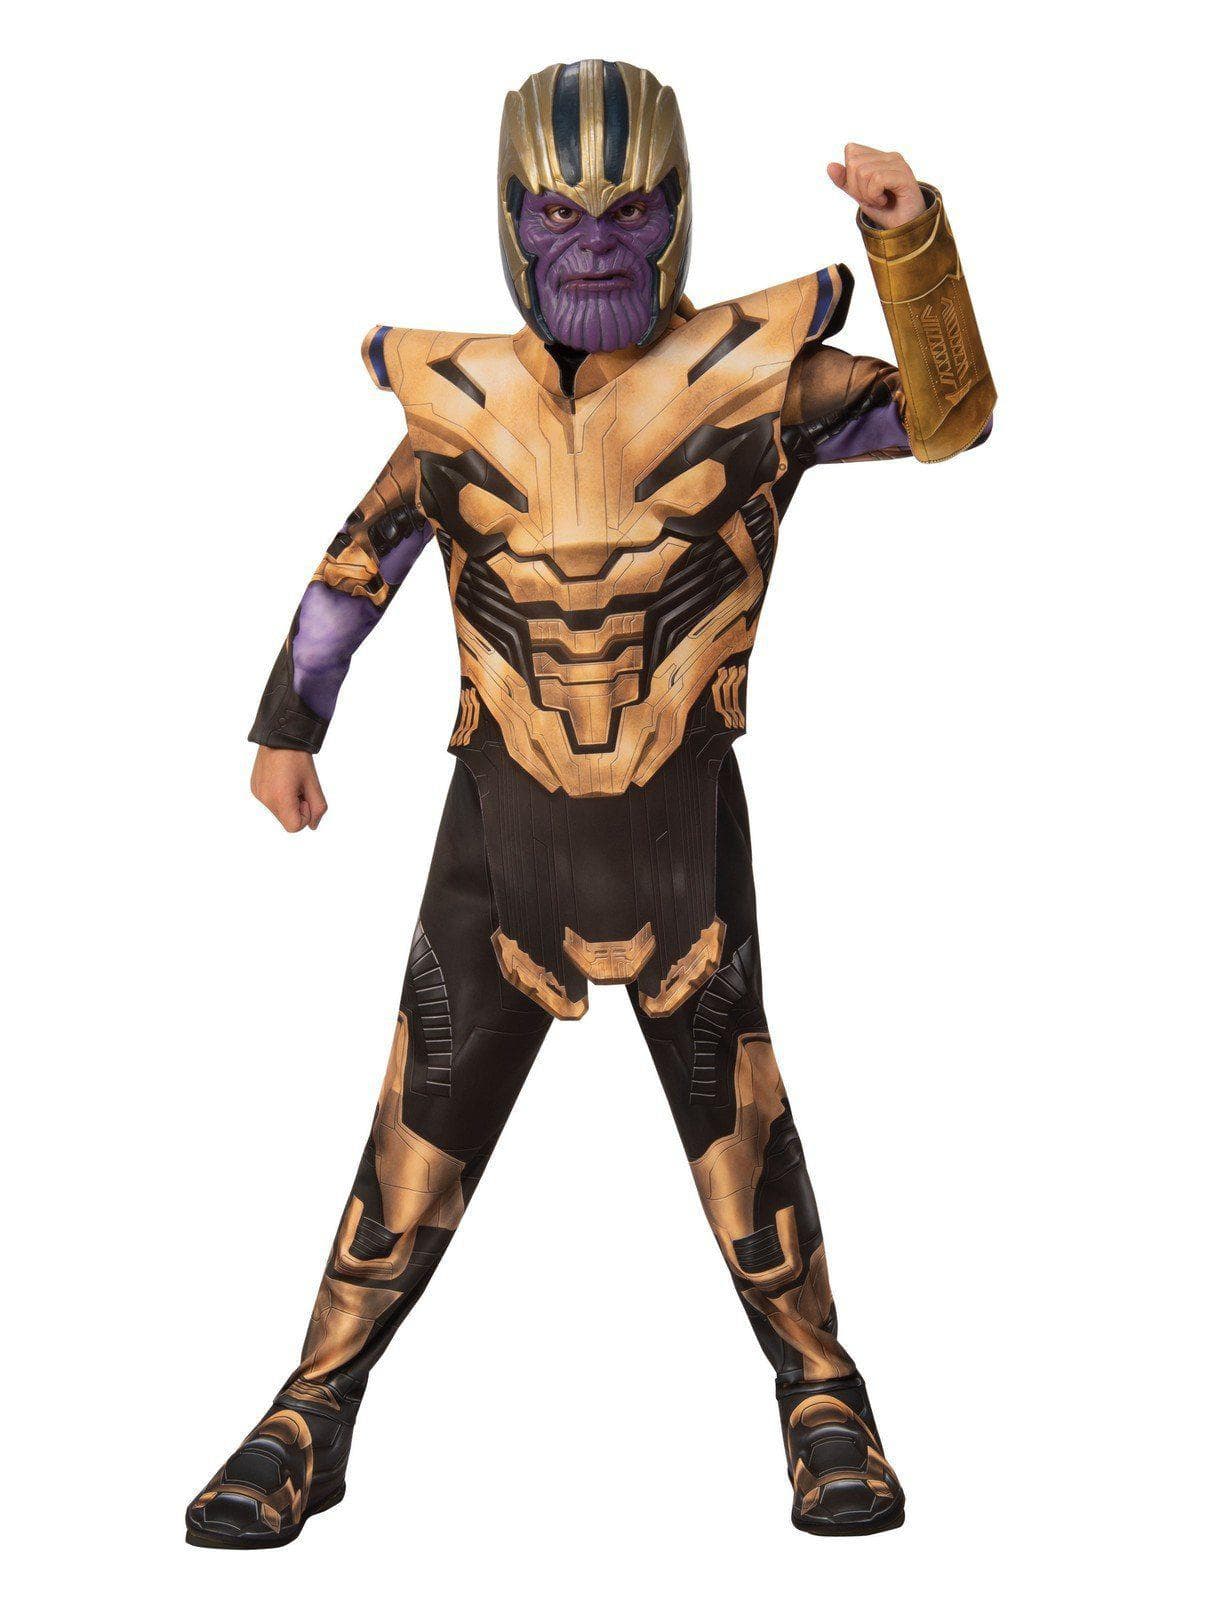 Kids Avengers Thanos Costume - costumes.com